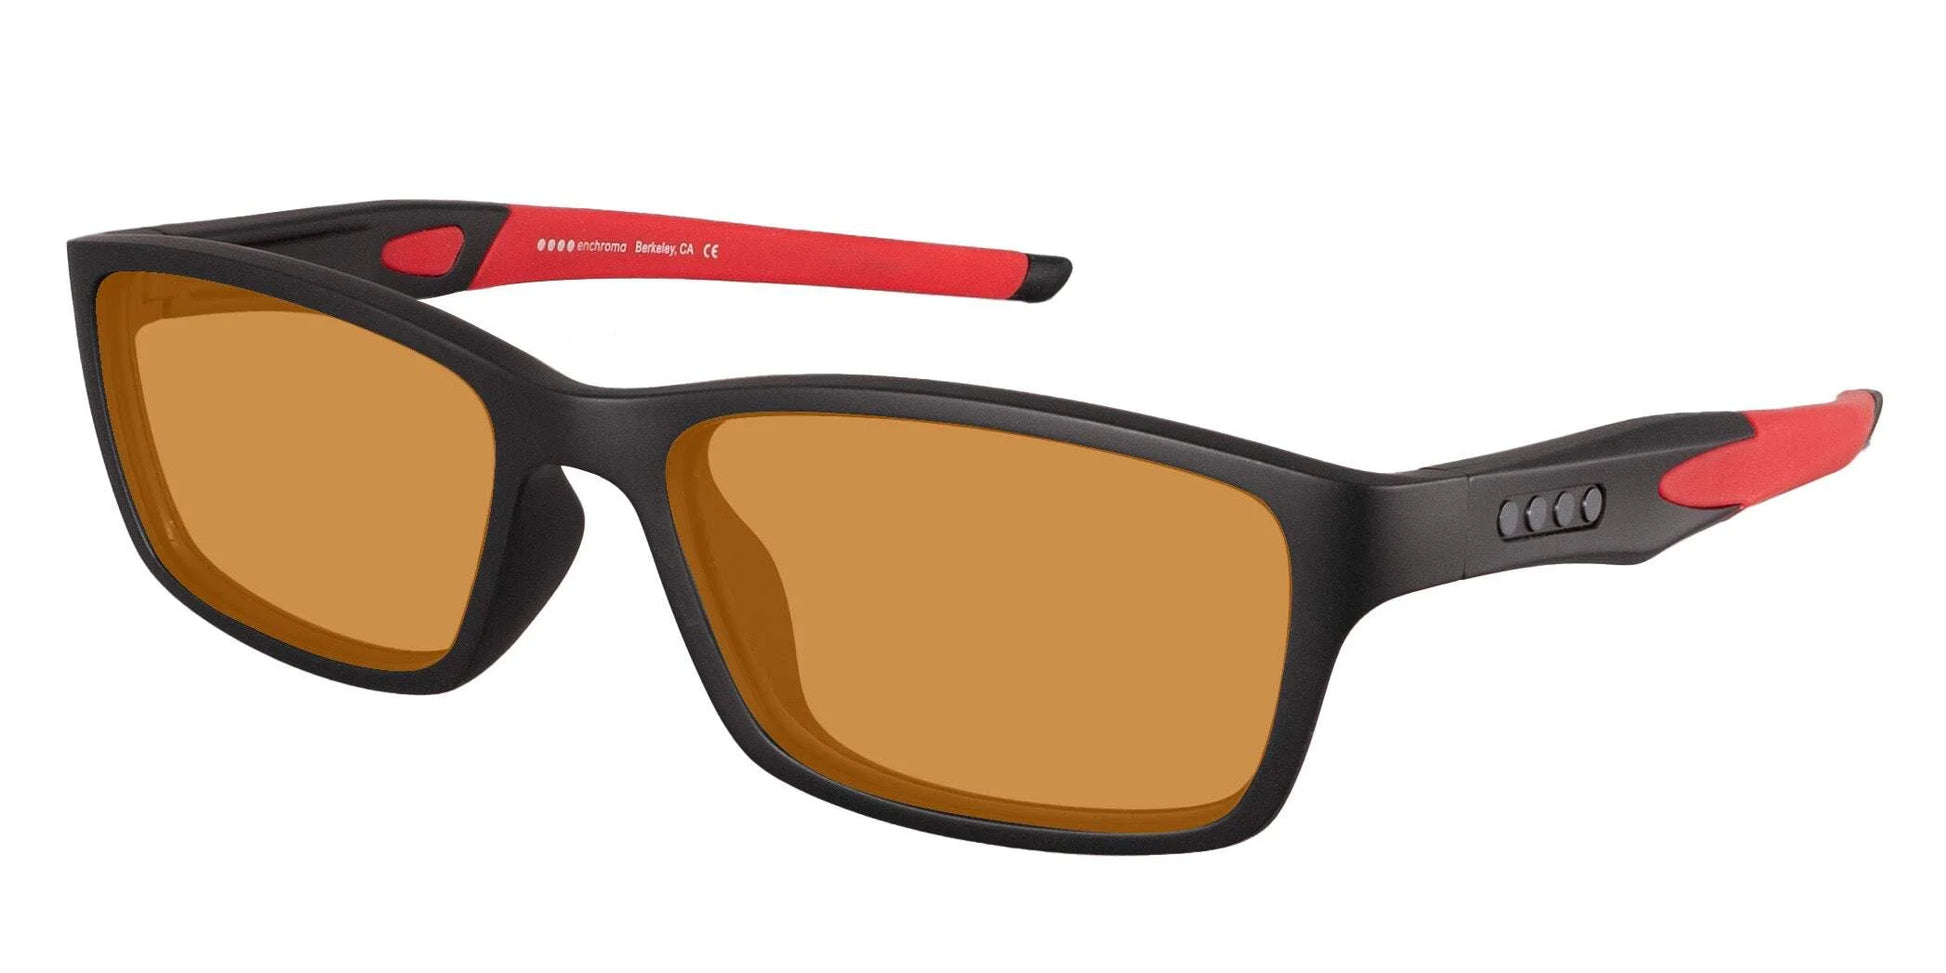 EnChroma Eton LX Sunglasses Black / Red / LX4 Deep Chestnut